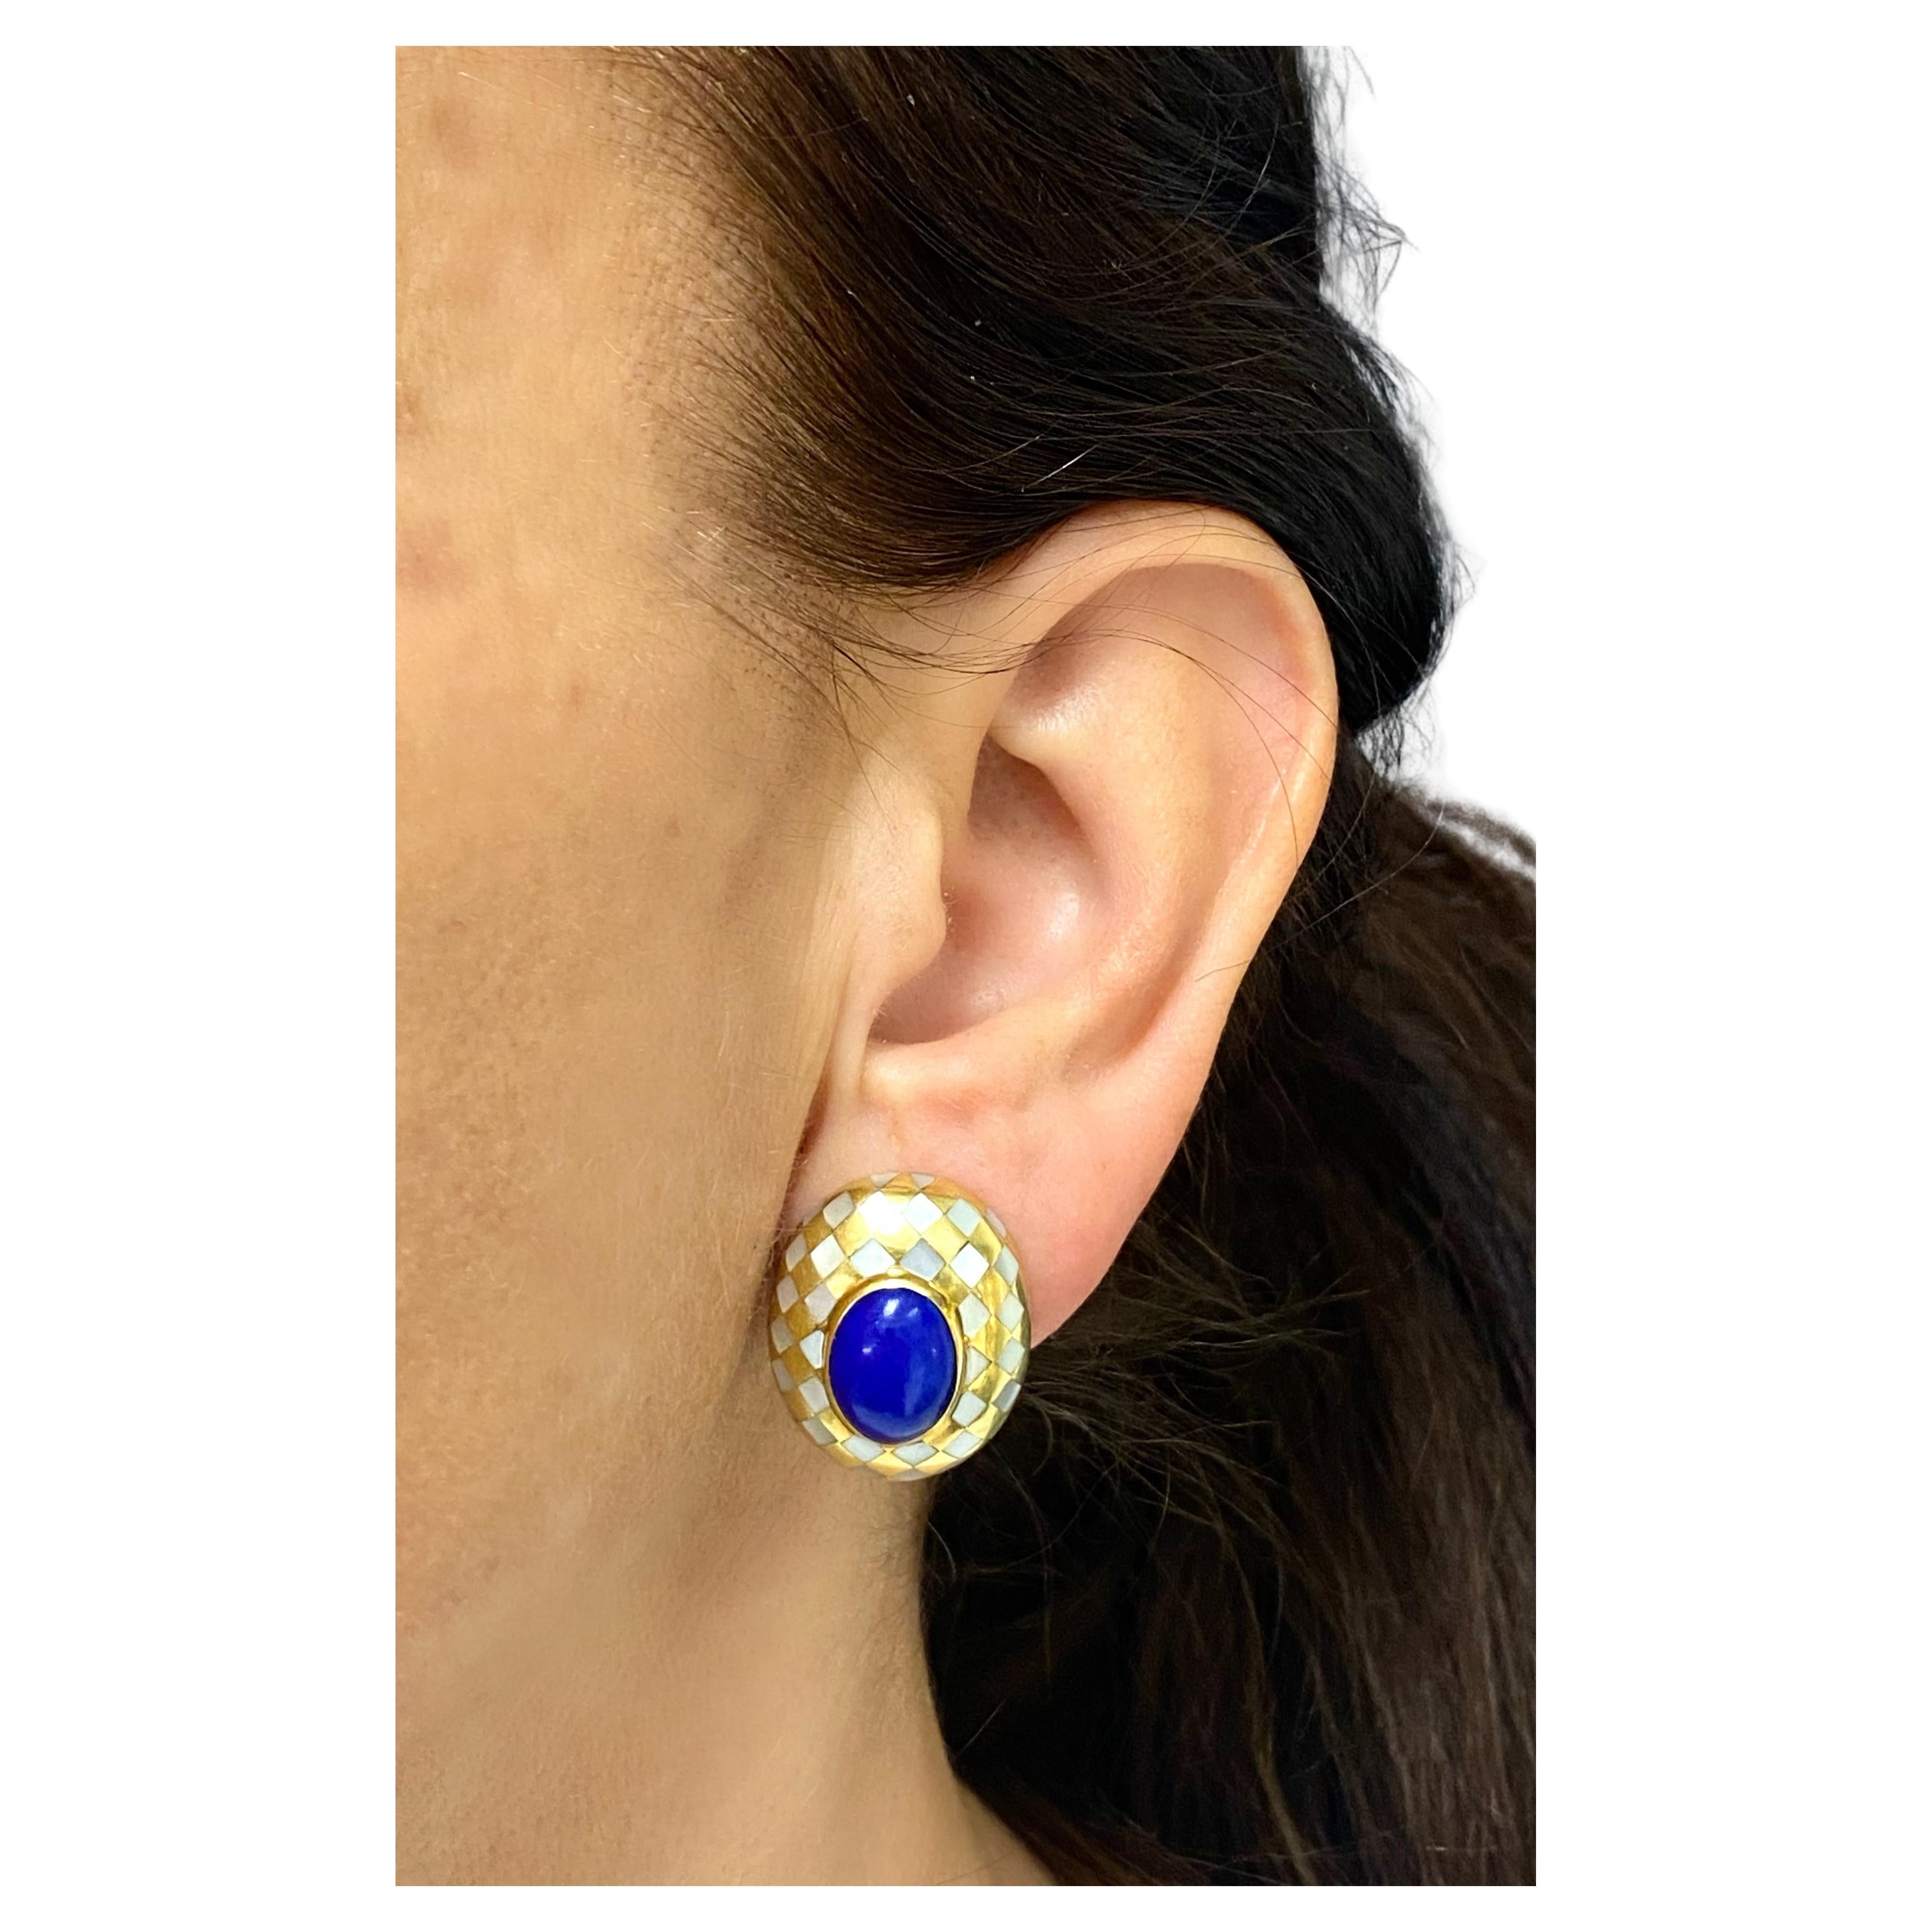 DESIGNER: Angela Cummings
CIRCA: 1984
MATERIALS: 18k Yellow Gold
GEMSTONE: Lapis Lazuli
GEMSTONE 2: Mother of Pearl Inlay
WEIGHT: 21.6 grams
MEASUREMENTS: 1” x 3/4”
HALLMARKS: Angela Cummings, 18K, 1984

ITEM DETAILS:
A pair of vintage earrings by